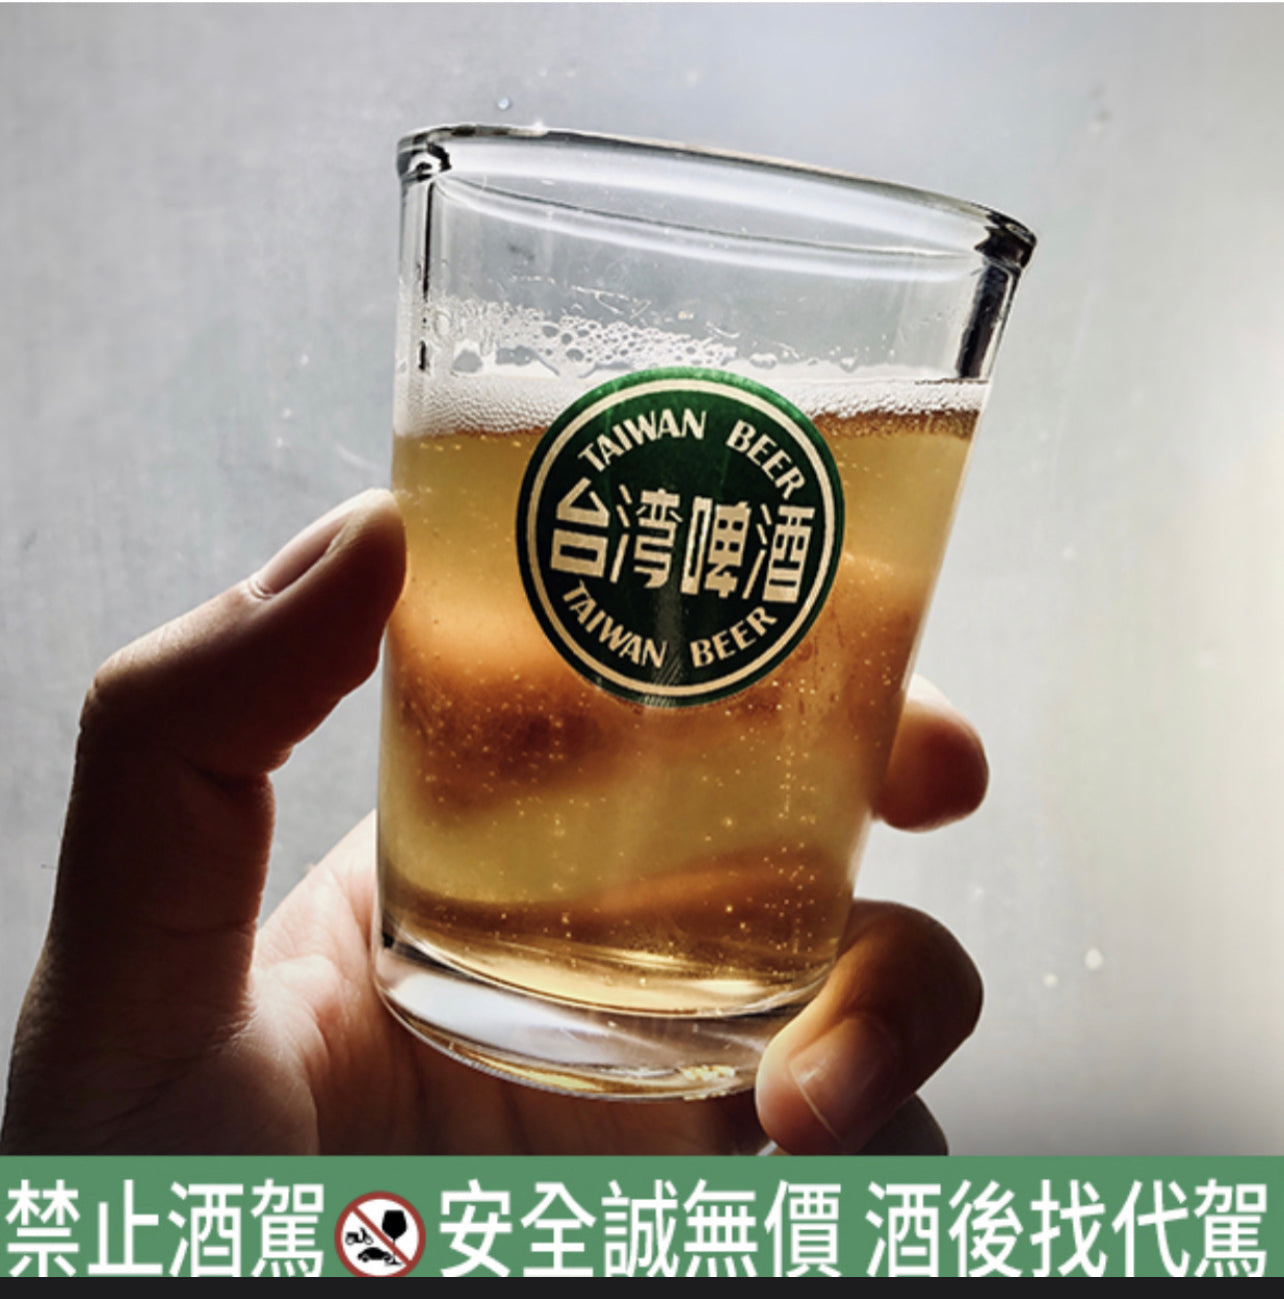 Small Taiwan Beer beer glass - 143ml